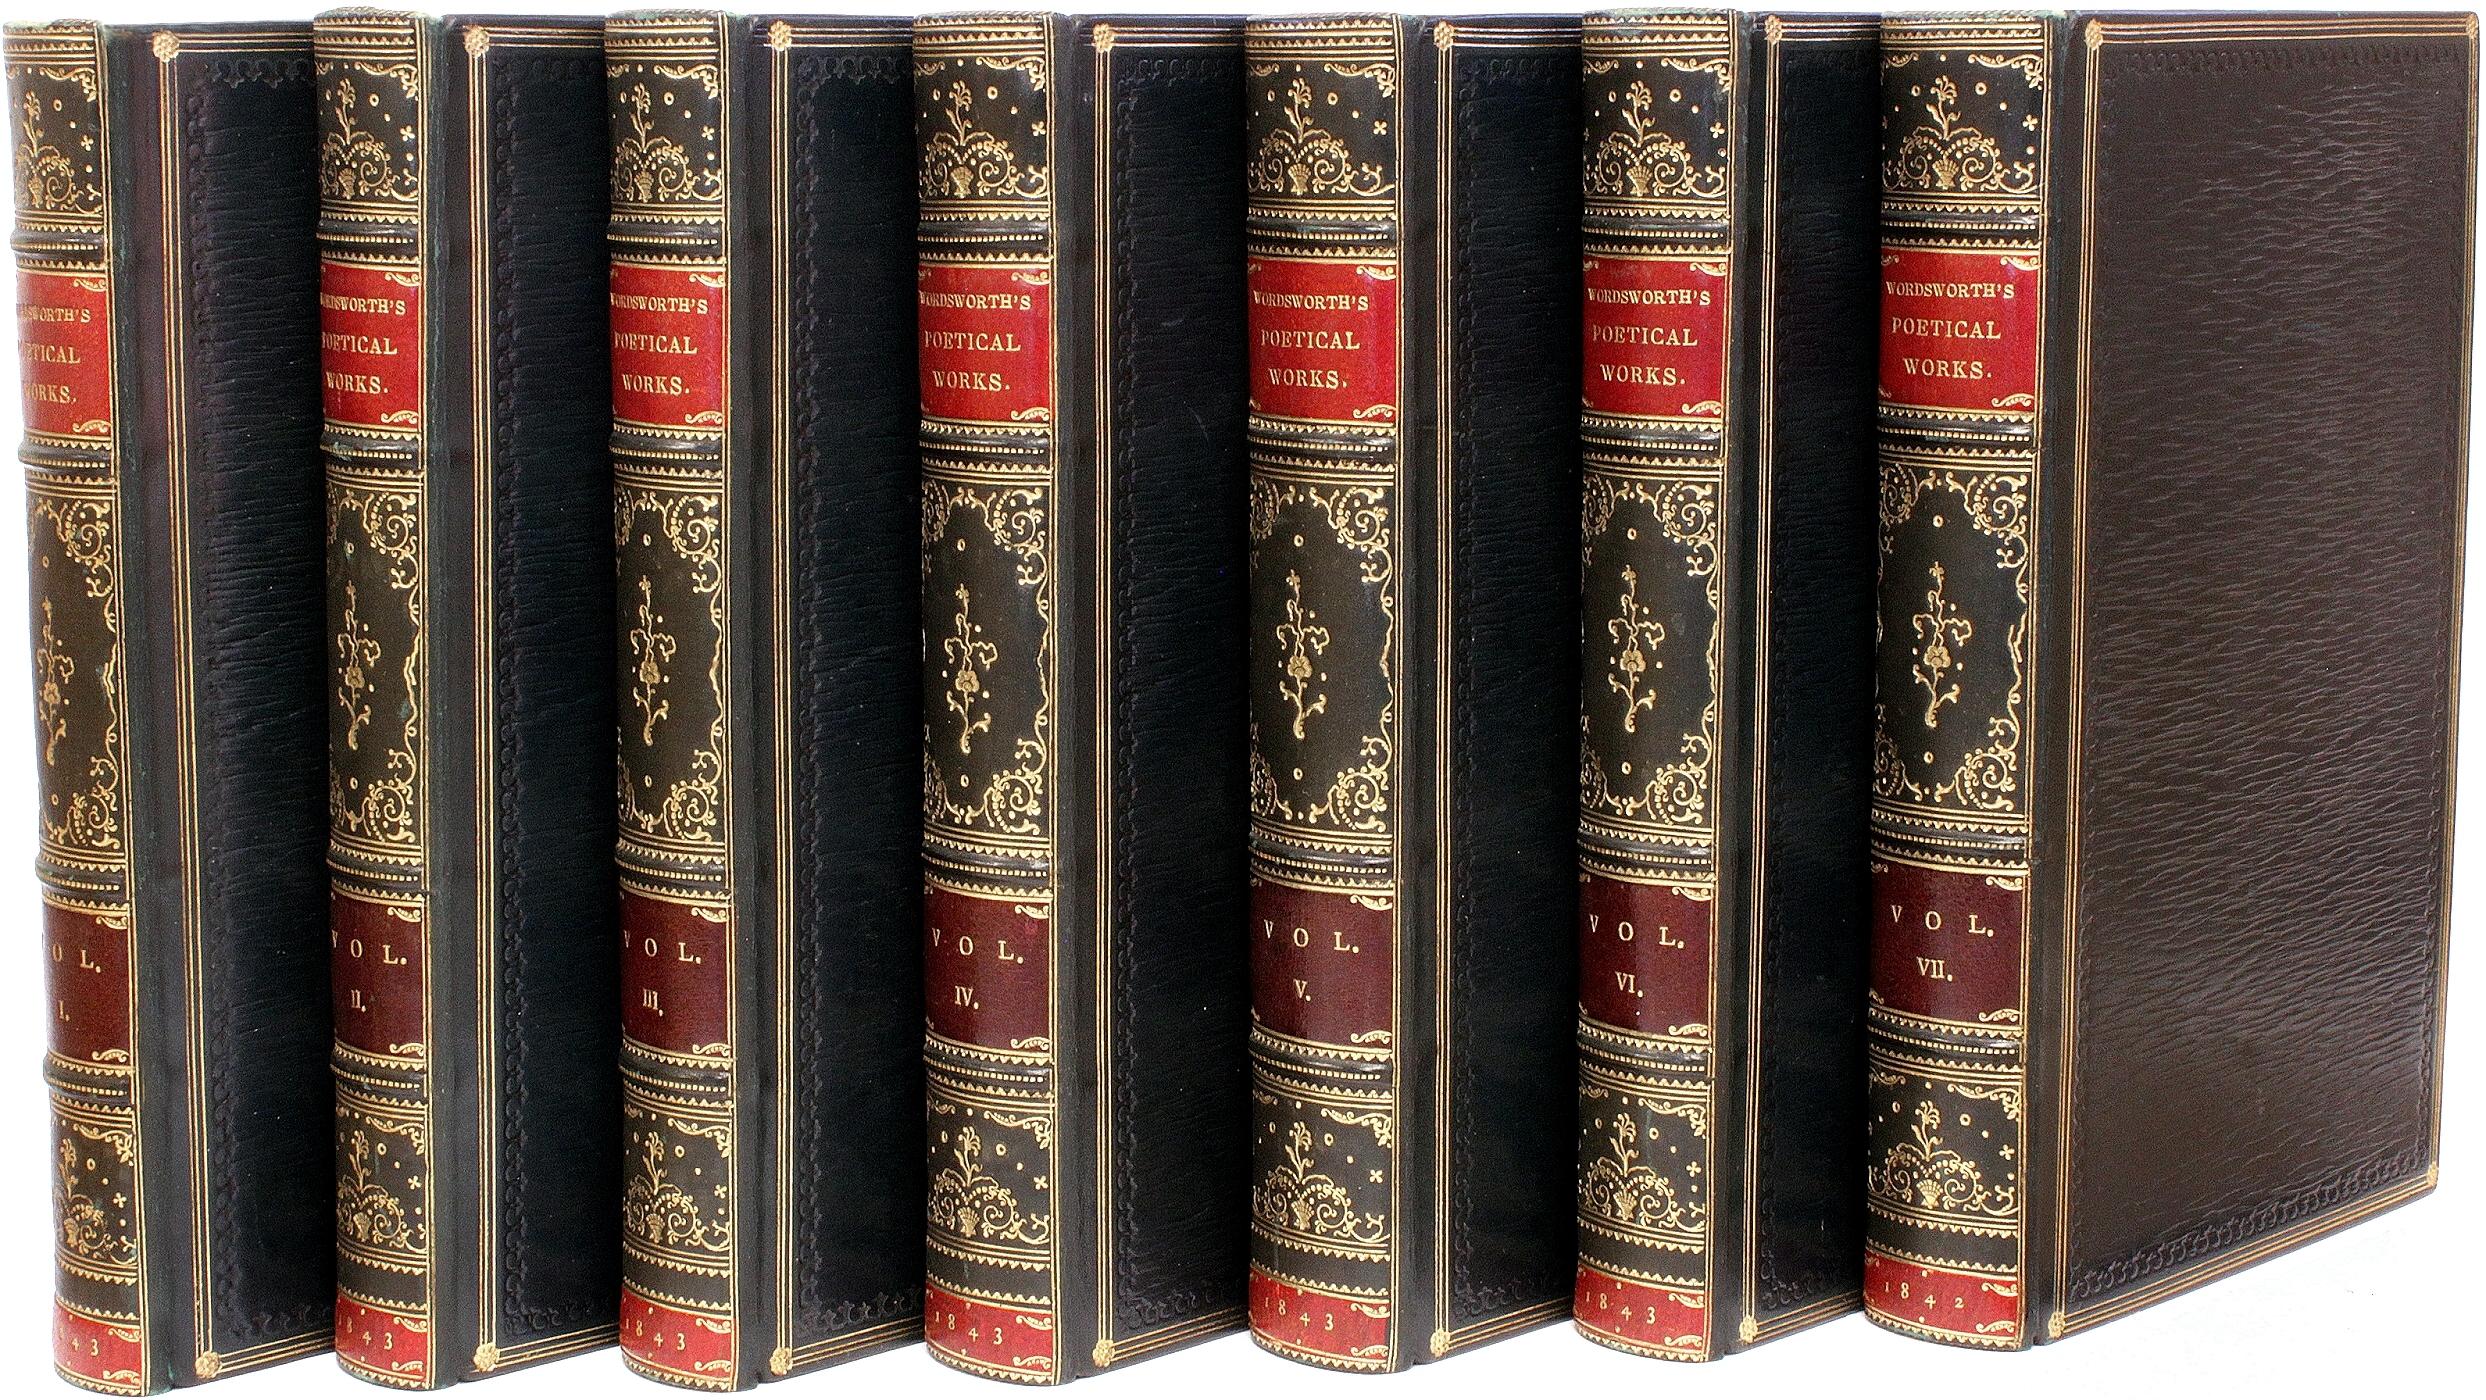 AUTHOR: WORDSWORTH, William. 

TITLE: The Poetical Works of William Wordsworth.

PUBLISHER: London: Edward Moxon, 1842-3.

DESCRIPTION: NEW EDITION. 7 vols., 6-7/8